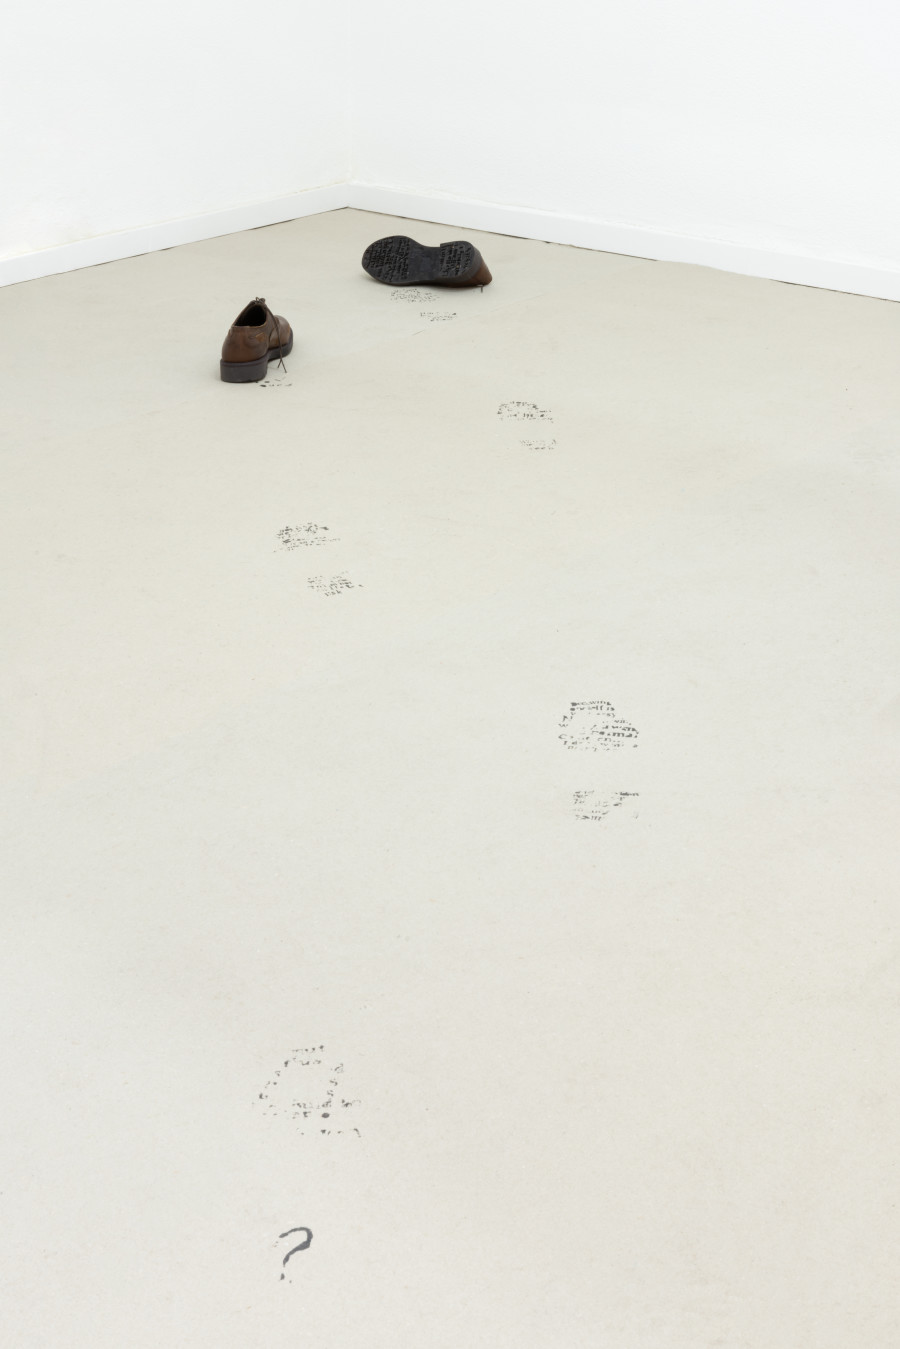 Francesco De Bernardi , installation view, “Stroll”, Four pairs of shoes, wood, black paint, 2022. Photo credits: Mattia Angelini